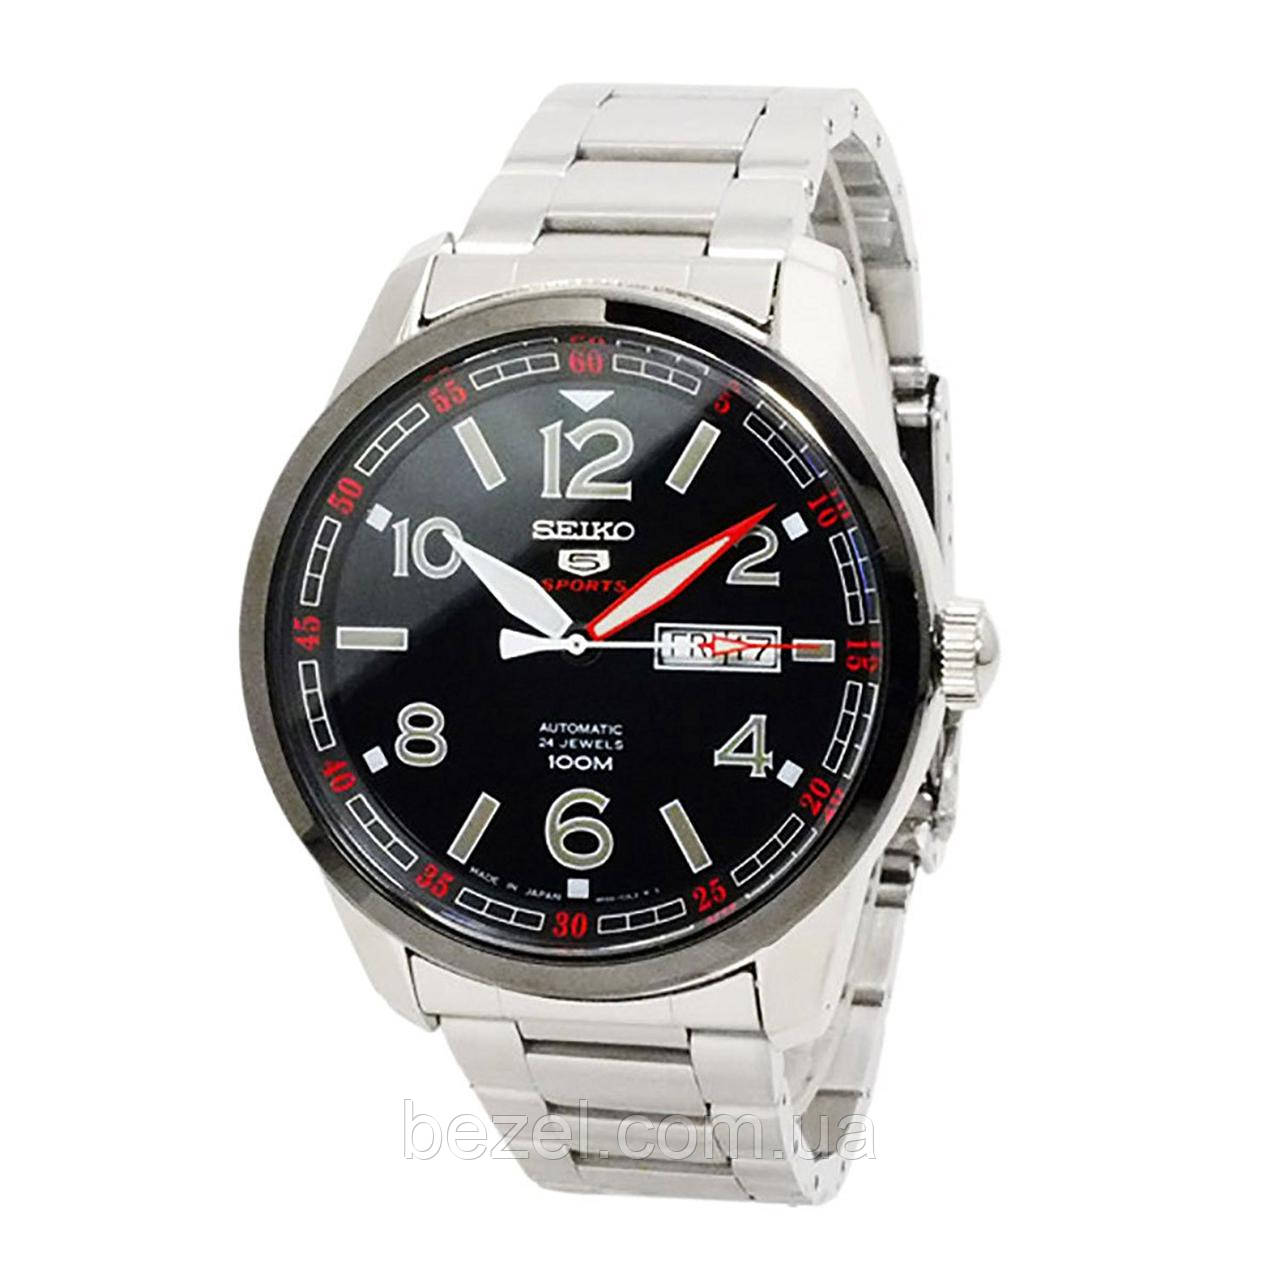 Seiko sport купить. Наручные часы Seiko srp513. Часы Seiko 5 Automatic. Сейко спорт 5 мужские часы. Наручные часы Seiko srp029k.